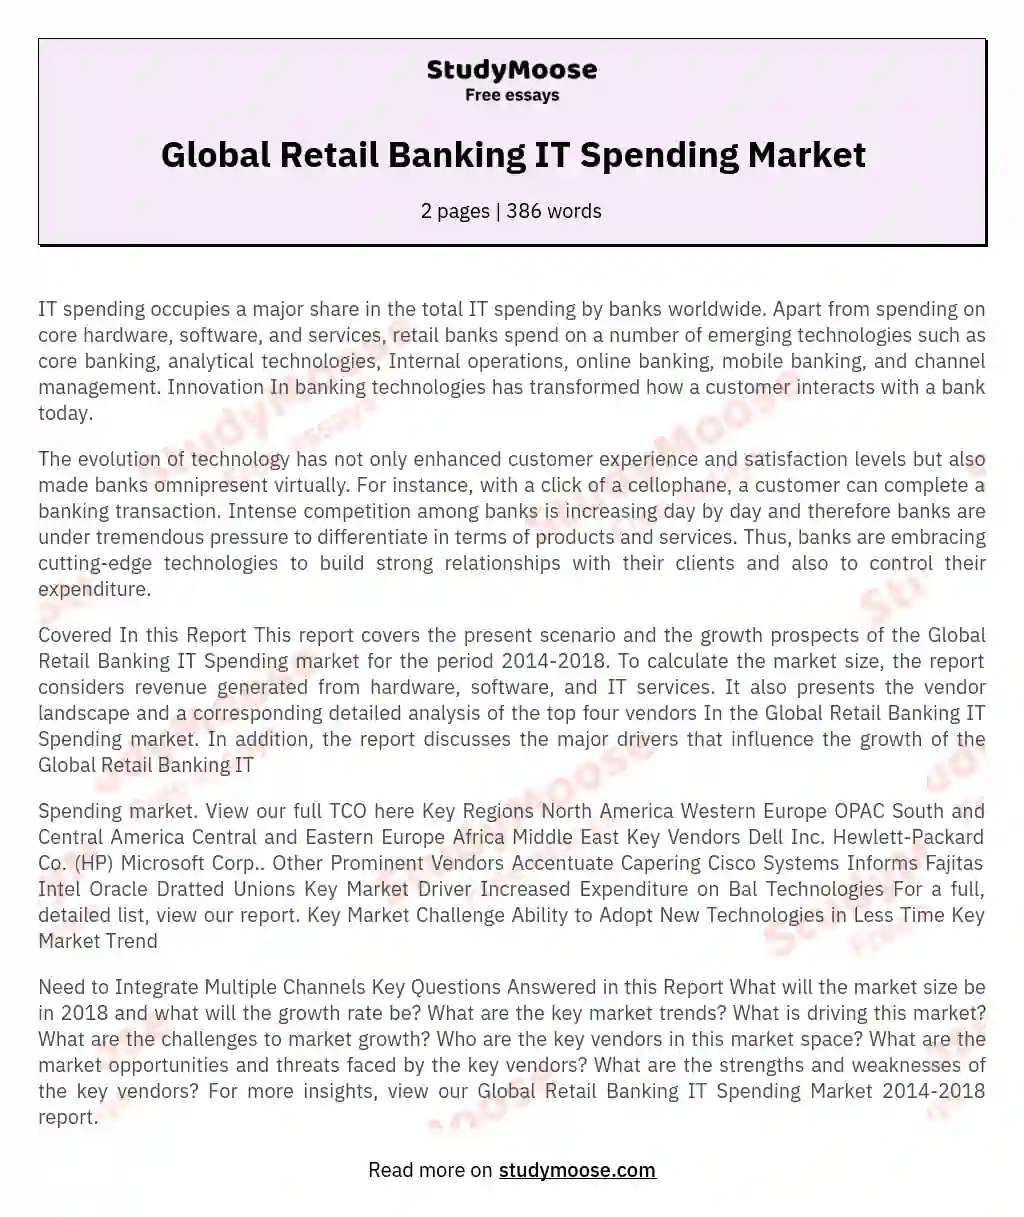 Global Retail Banking IT Spending Market essay